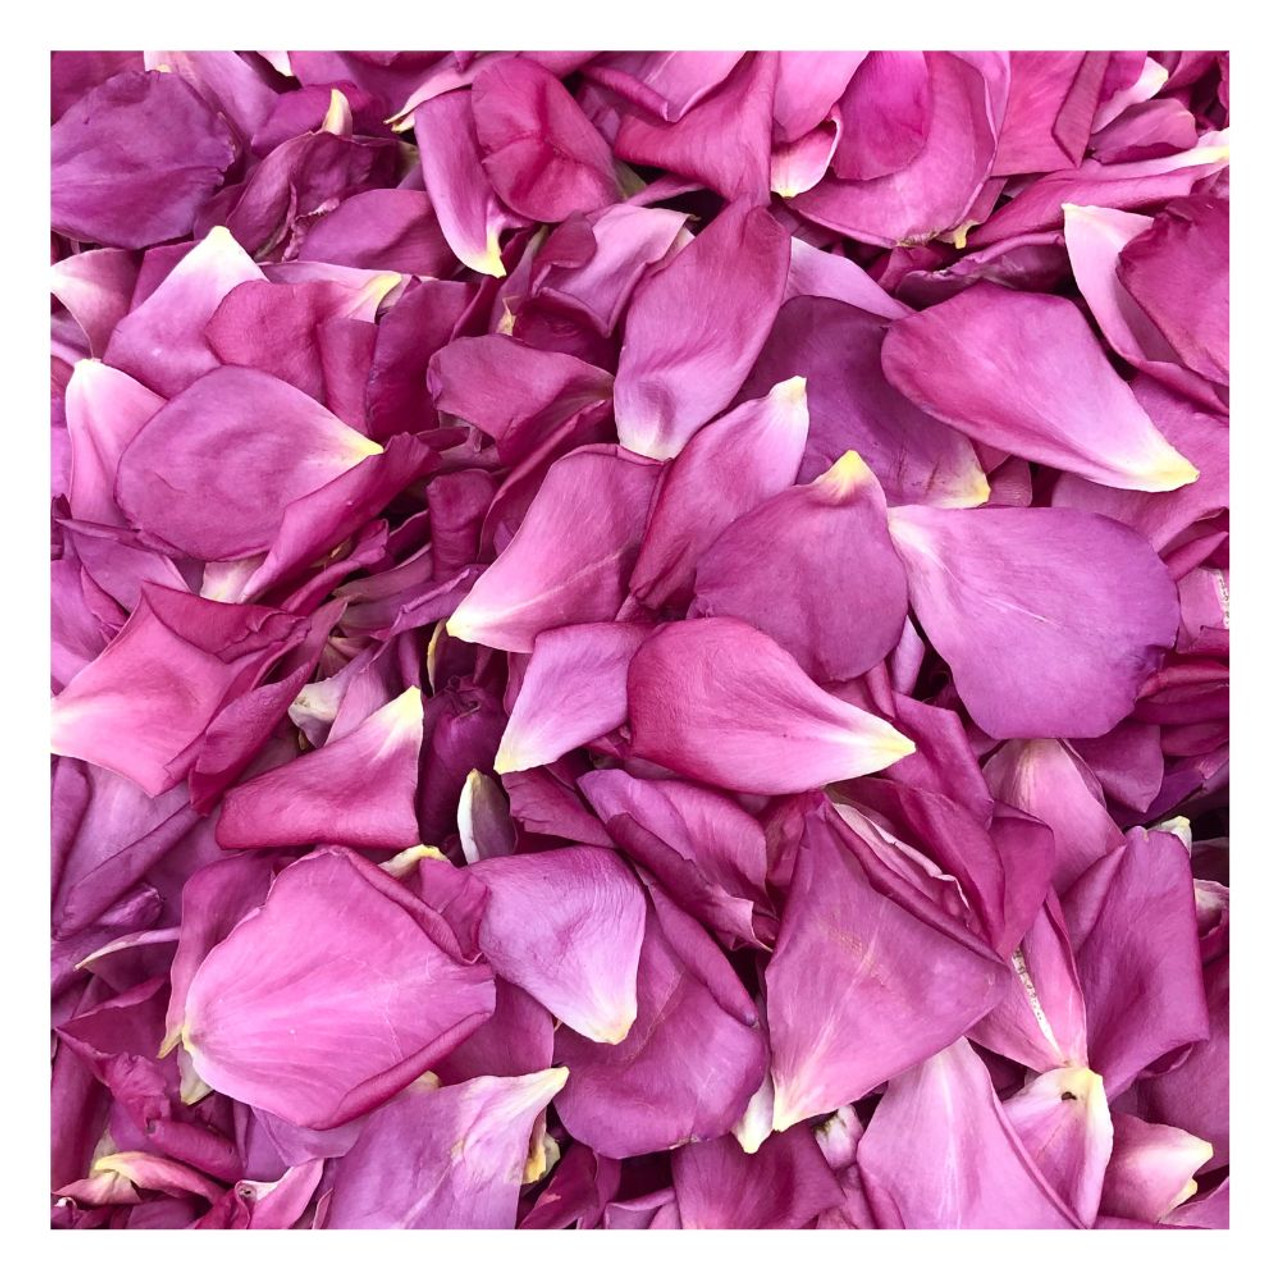 Dried Rose petals 20g